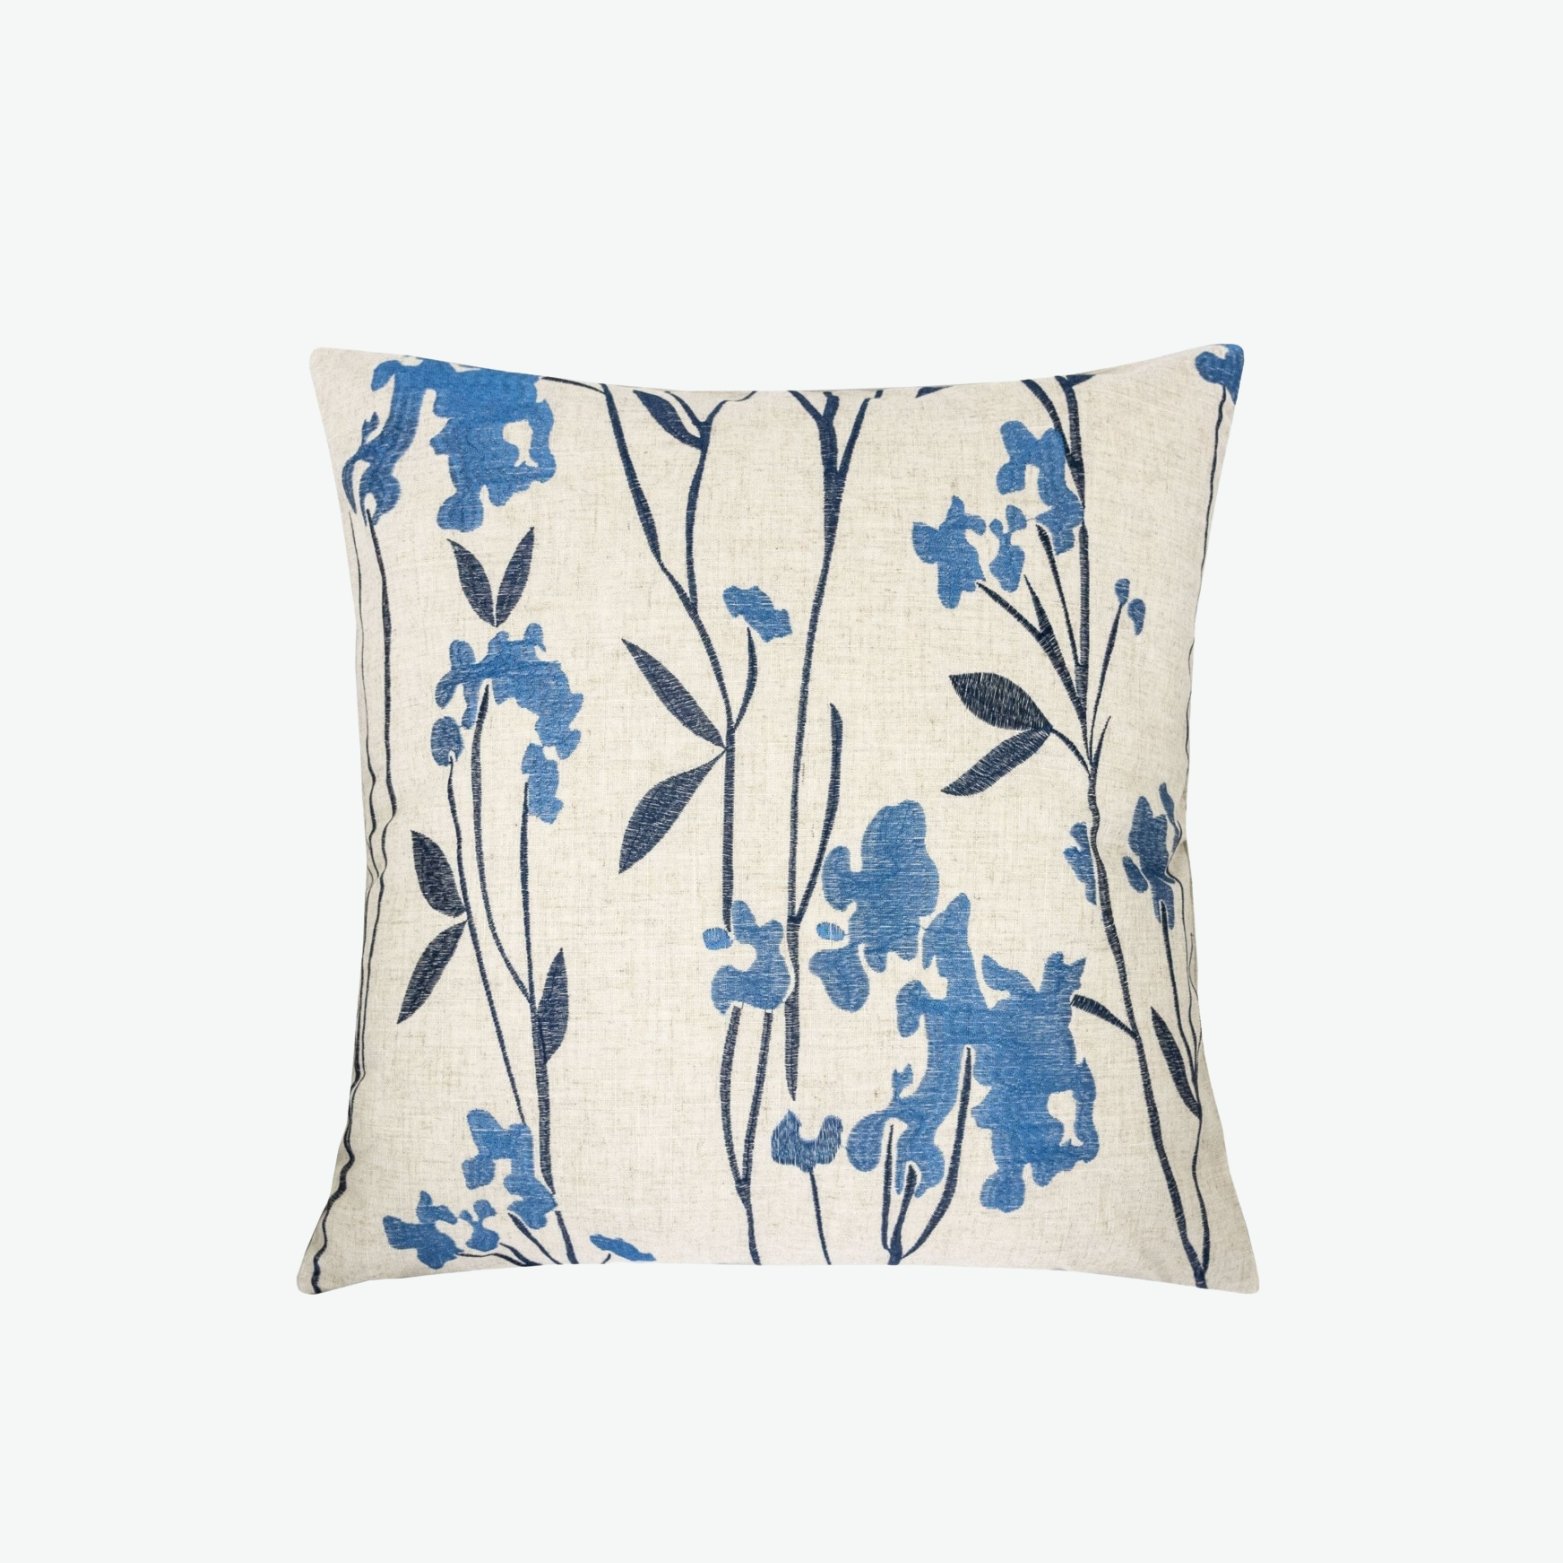 Textured Beige Throw Pillow with Blue Blurb Flowers and Dark Grey Stems.jpg